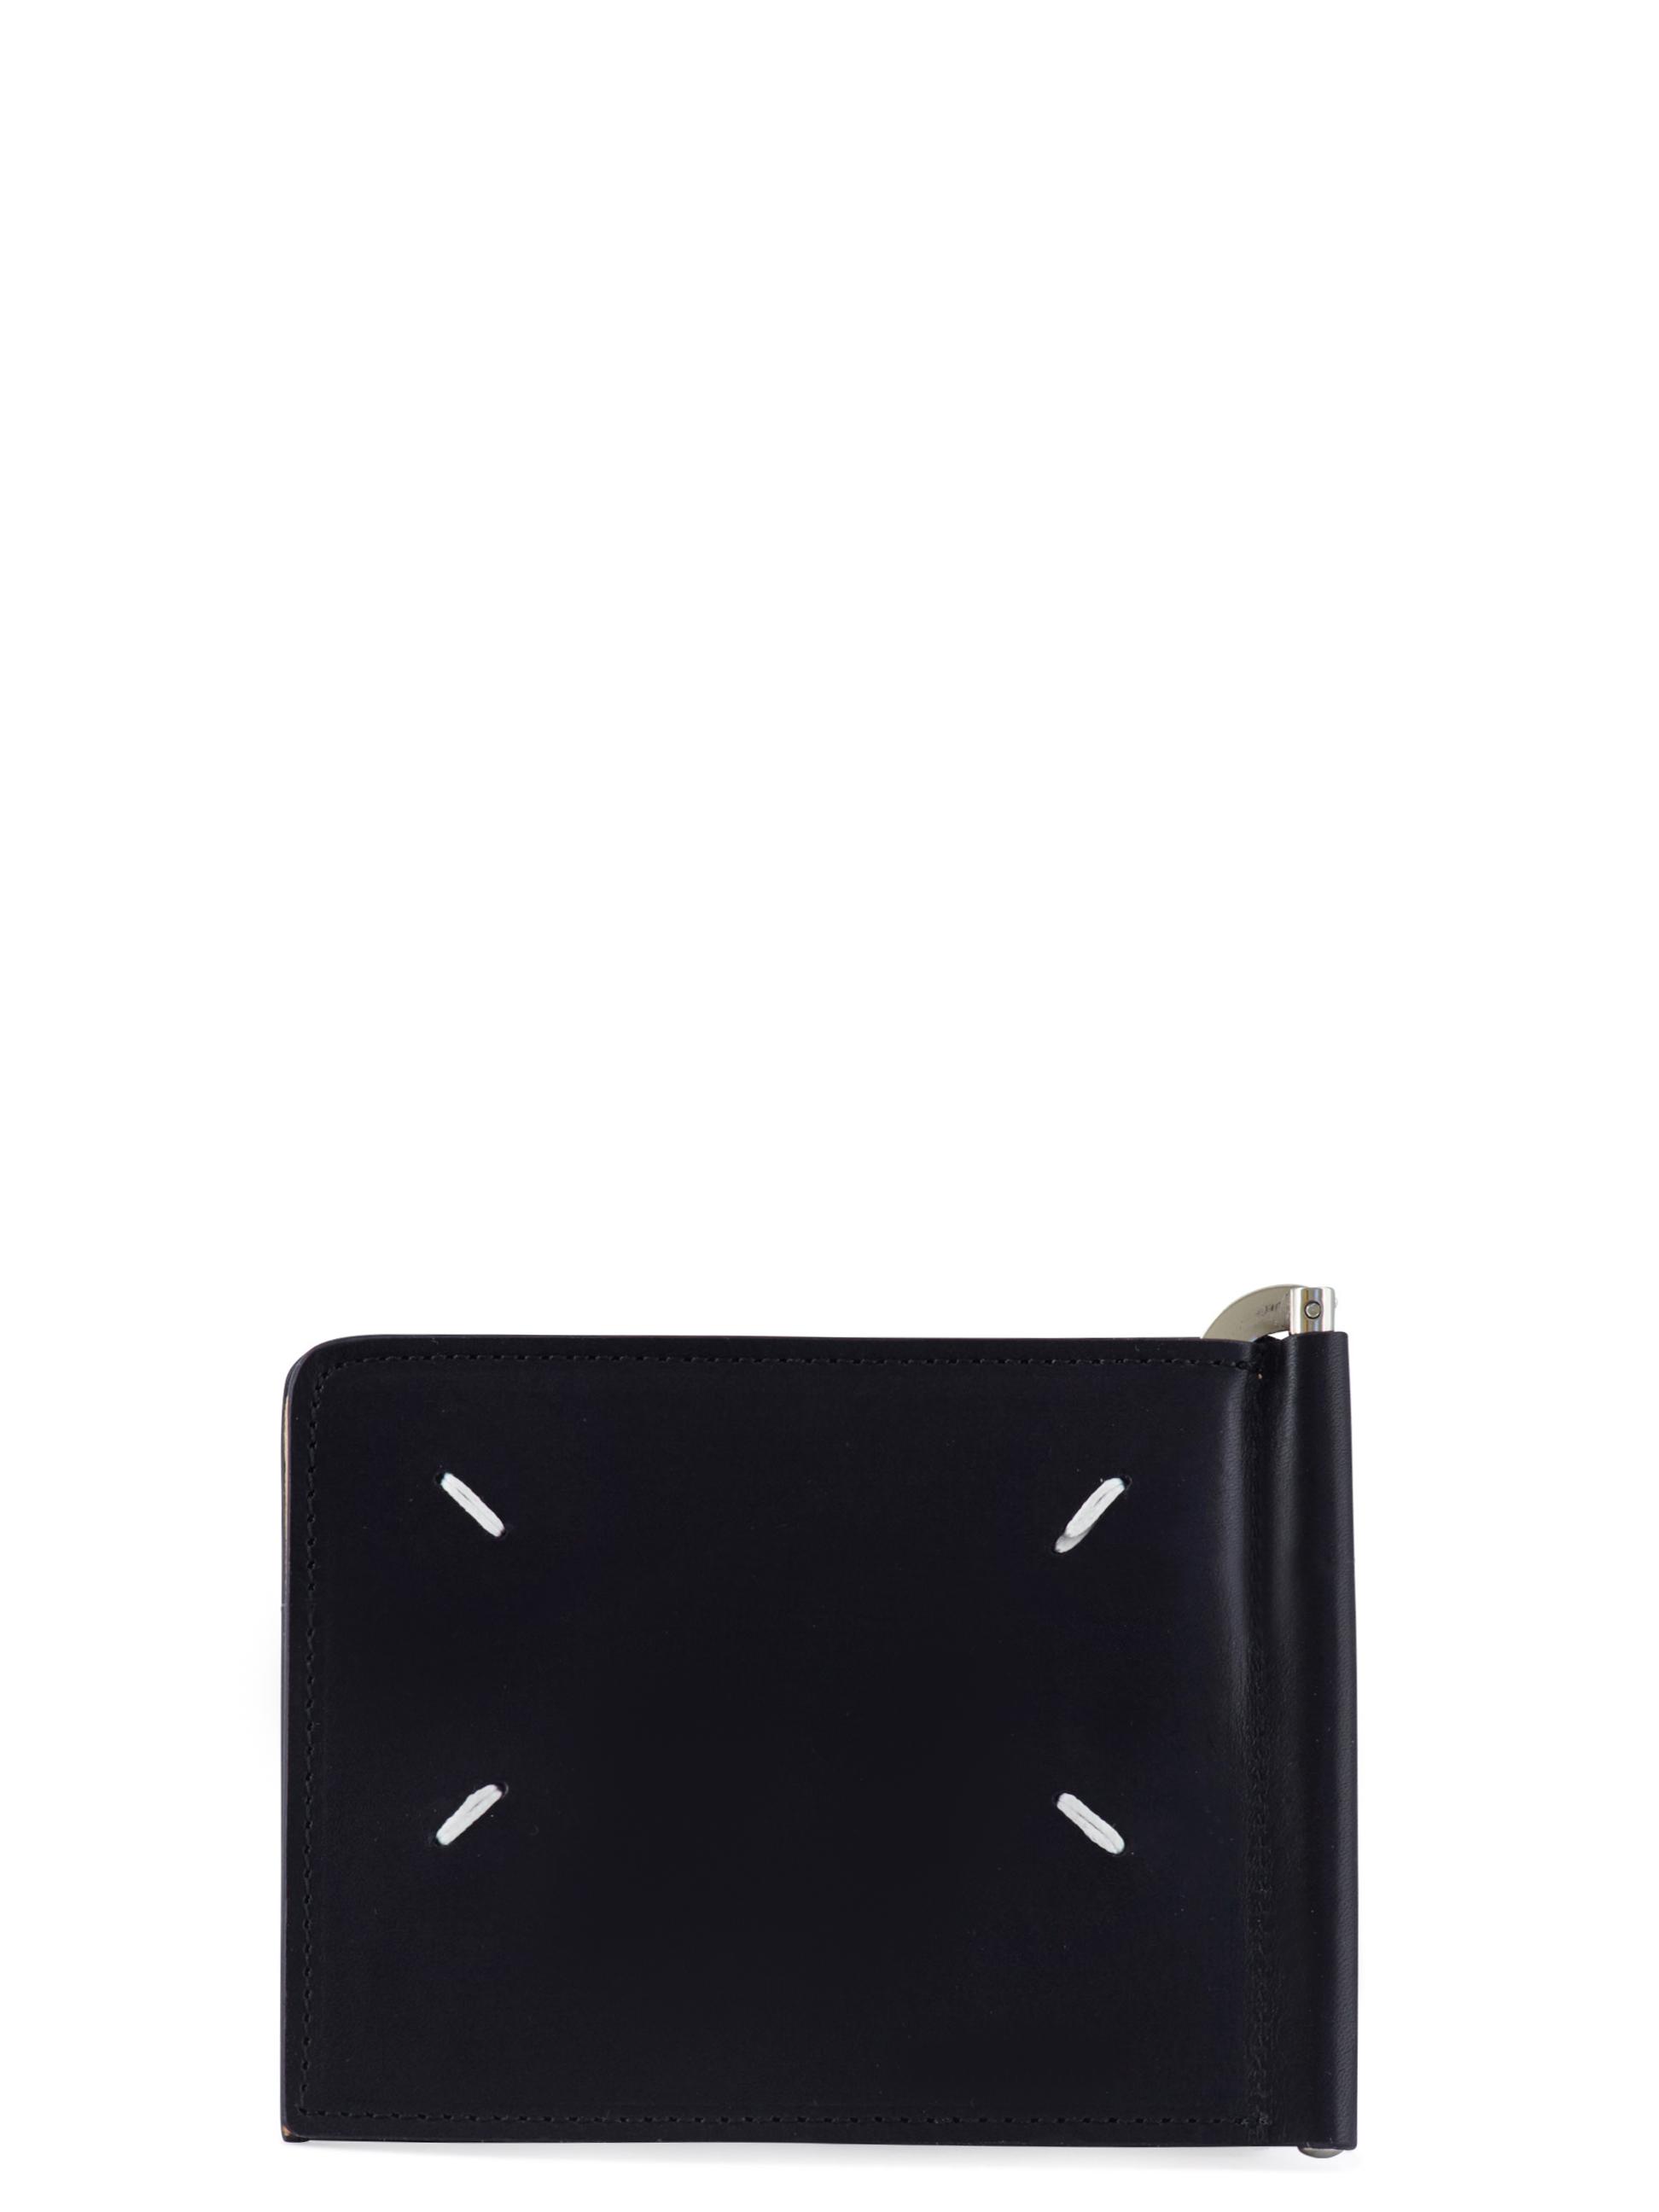 Maison Margiela Money Clip Leather Wallet in Black for Men - Lyst